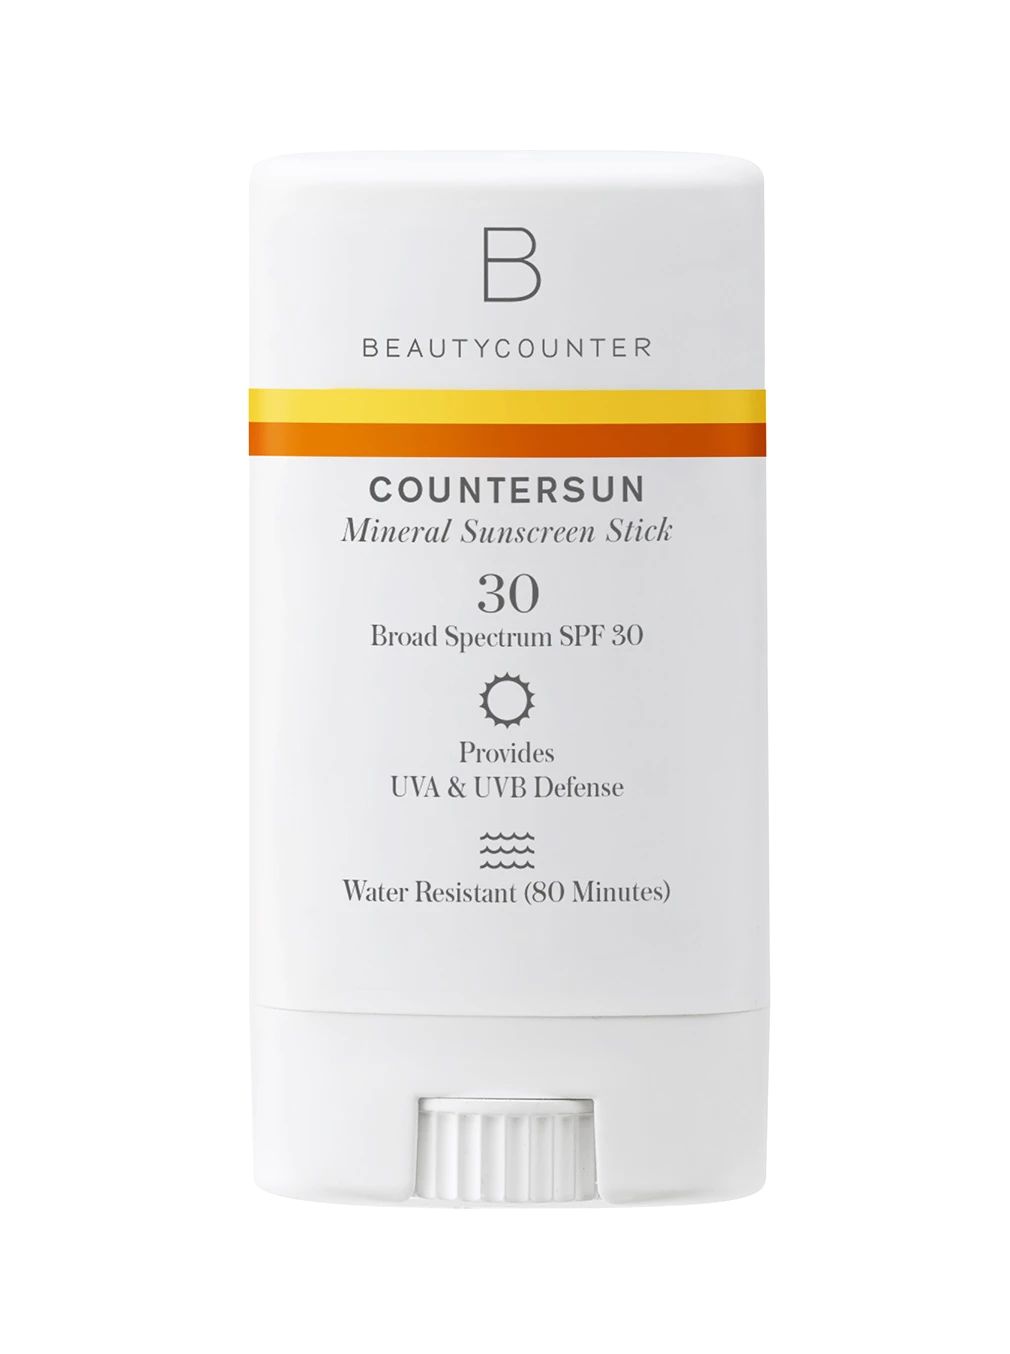 Countersun Mineral Sunscreen Stick SPF 30 – 0.5 oz. | Beautycounter.com